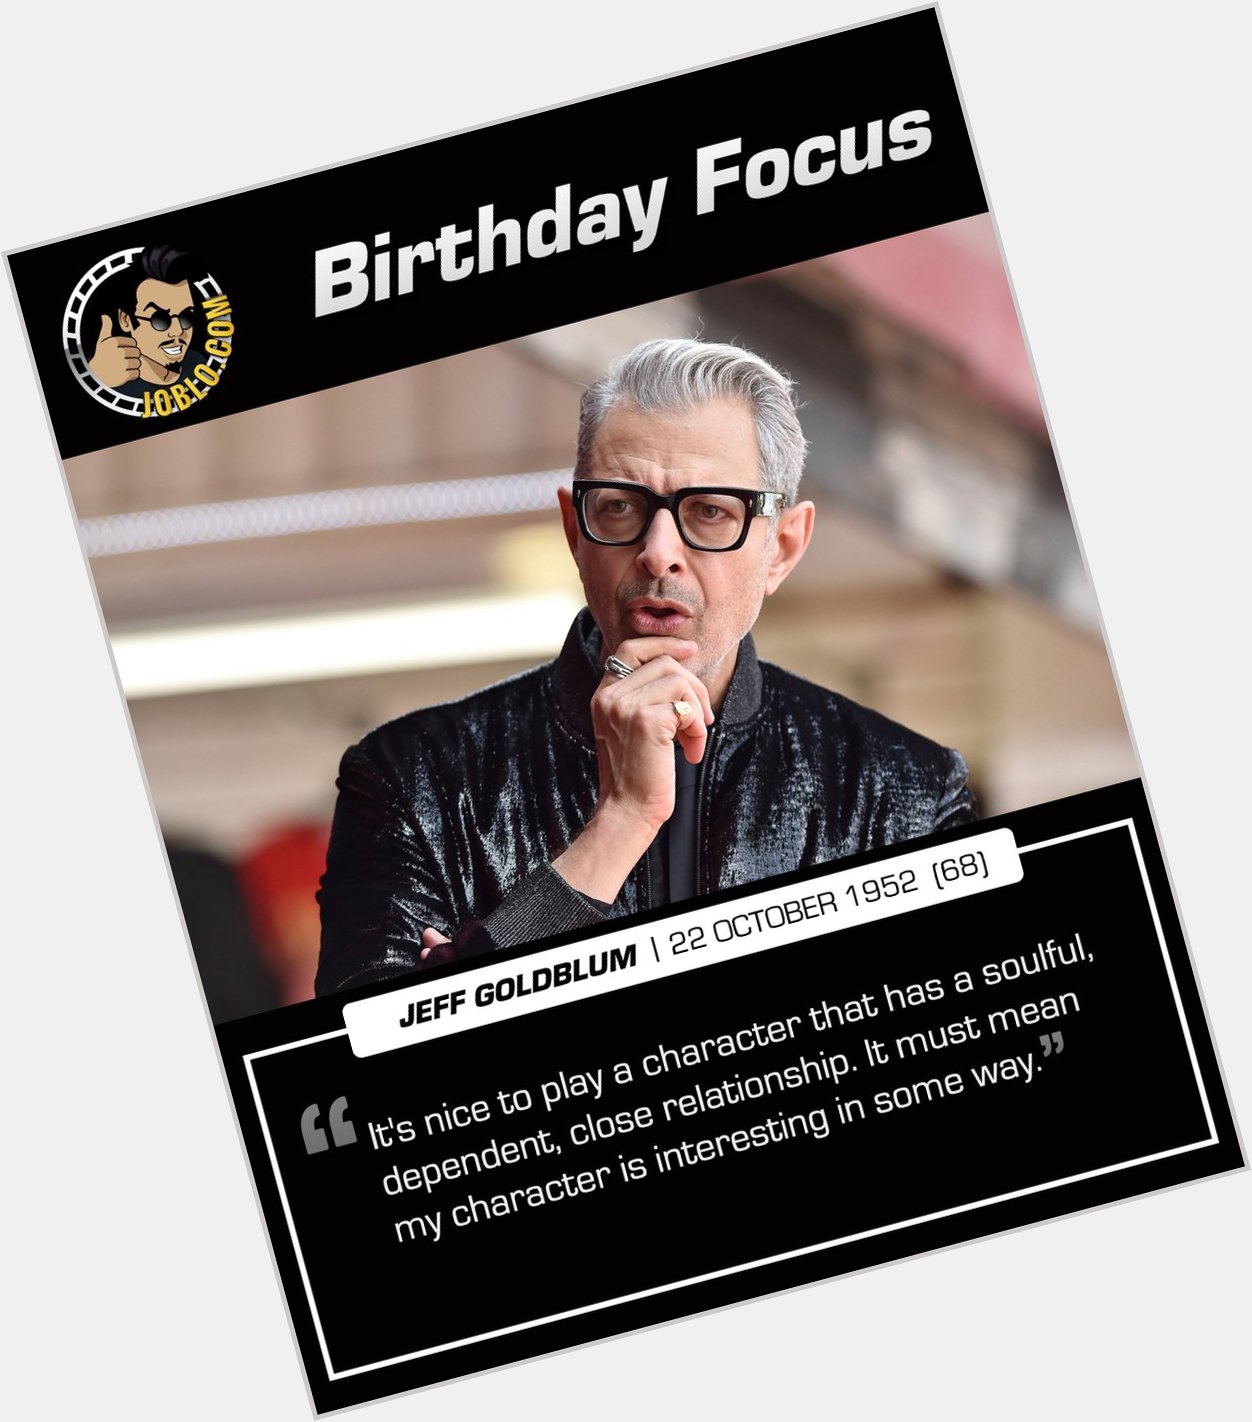 Wishing Jeff Goldblum a very happy 68th birthday! 